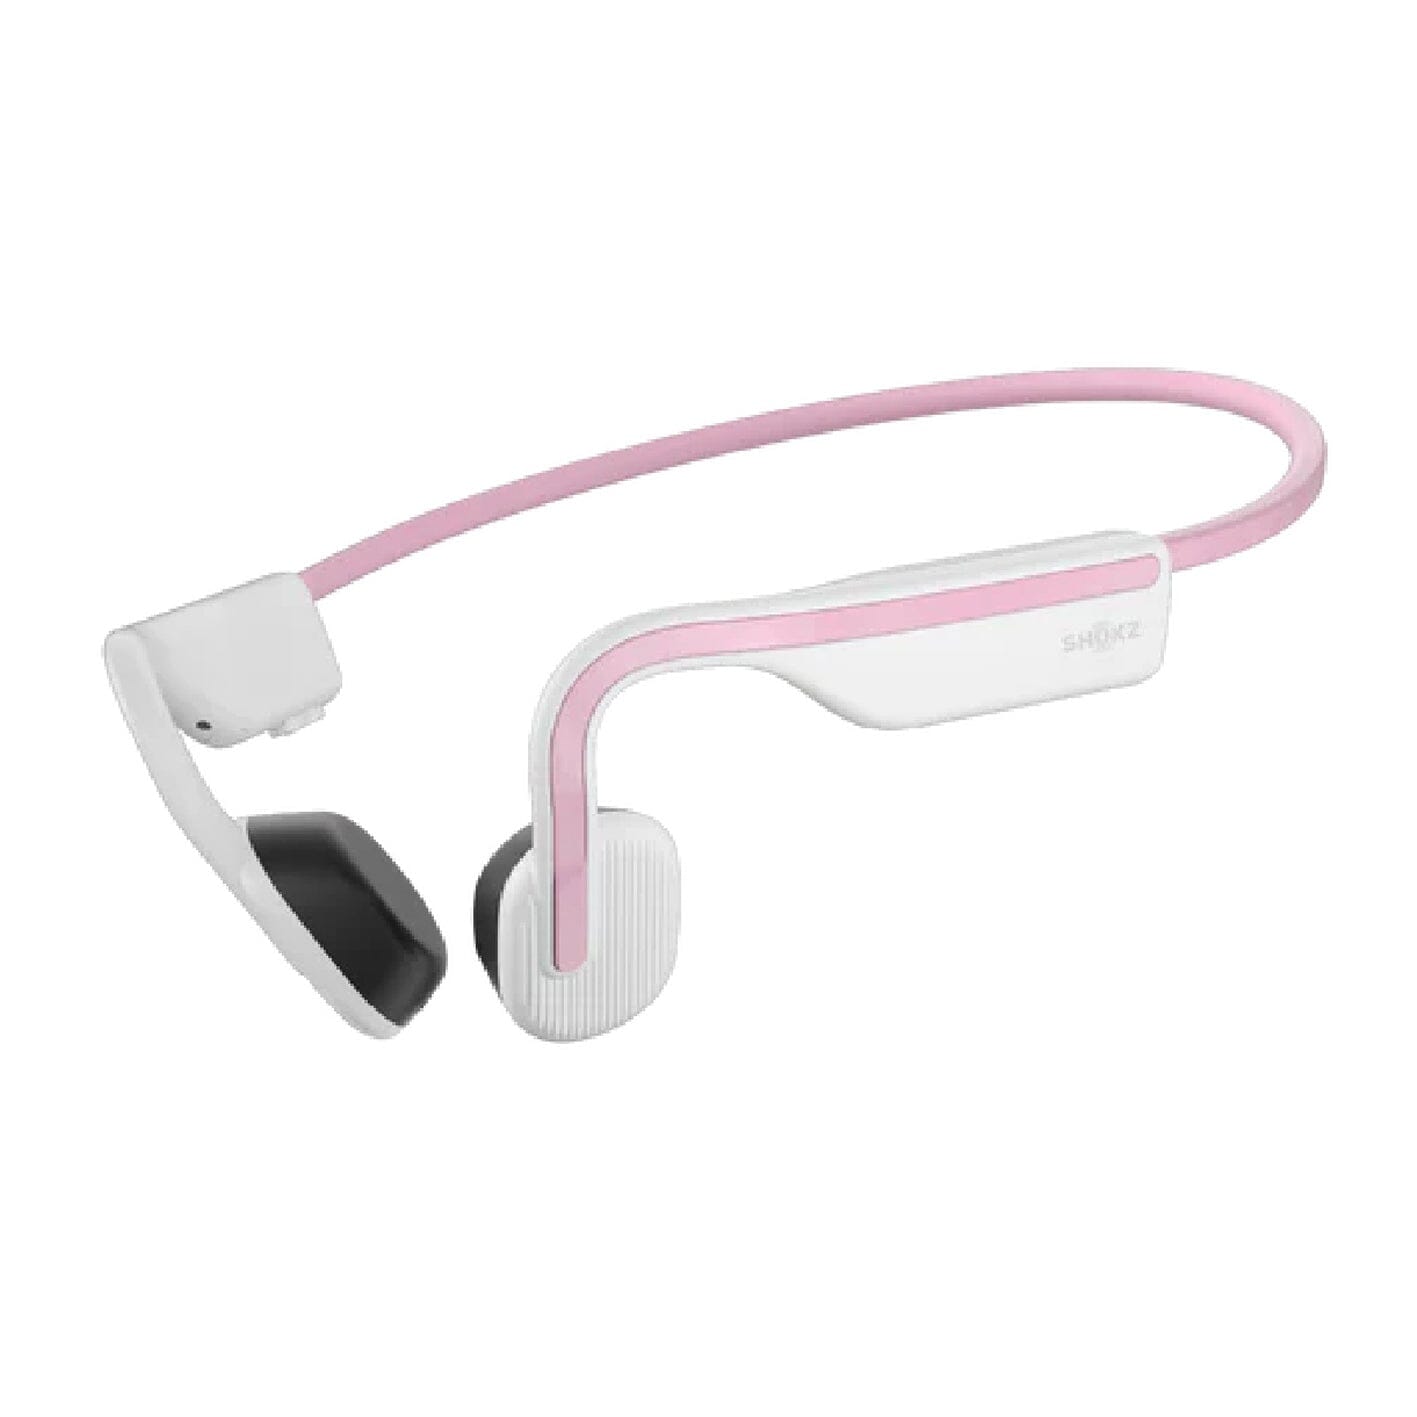 SHOKZ OpenMove - Open-Ear Bluetooth Sport Headphones - Bone Conduction Wireless Earphones - Sweatproof for Running and Workouts, with Sticker Pack ONE2WORLD Pink 